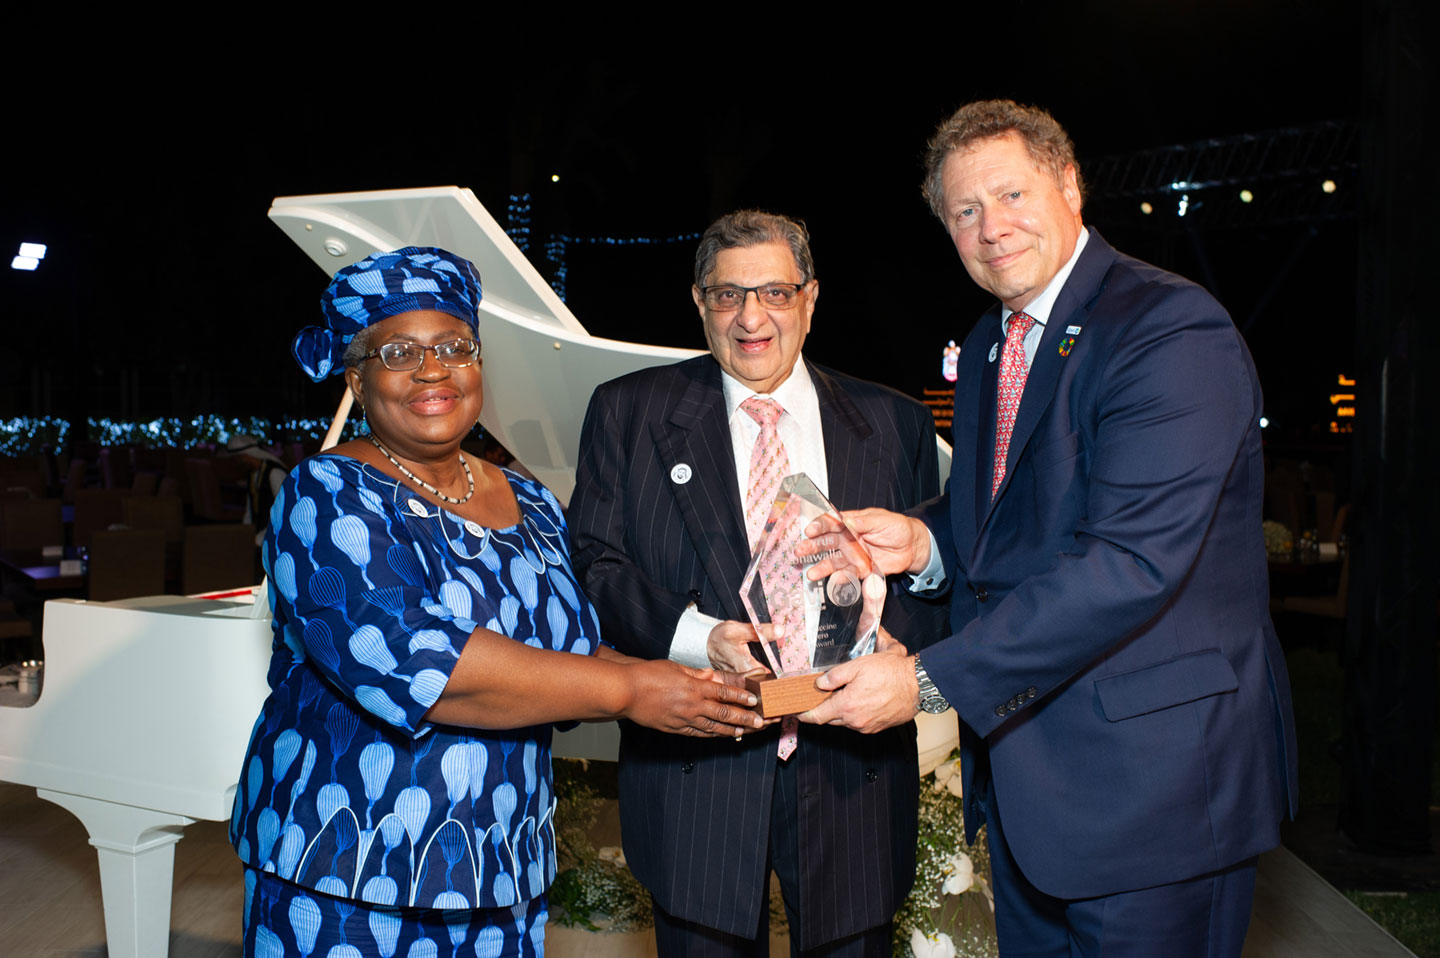 Dr Ngozi Okonjo-Iweala, Gavi Board Chair, and Dr Seth Berkley, Gavi CEO, present Dr Cyrus Poonawalla with the inaugural Vaccine Hero award at Gavi’s mid-term review in Abu Dhabi. Credit: Gavi/2018/Oscar Saykens.